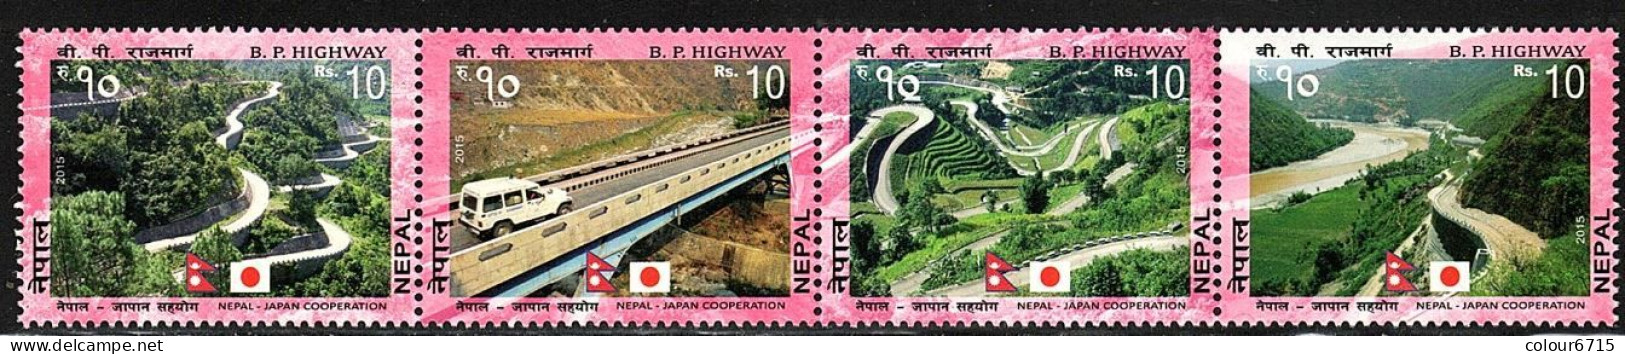 Nepal 2015 Nepal-Japan Co-operation - B.P.Highway Stamps 4v MNH - Nepal